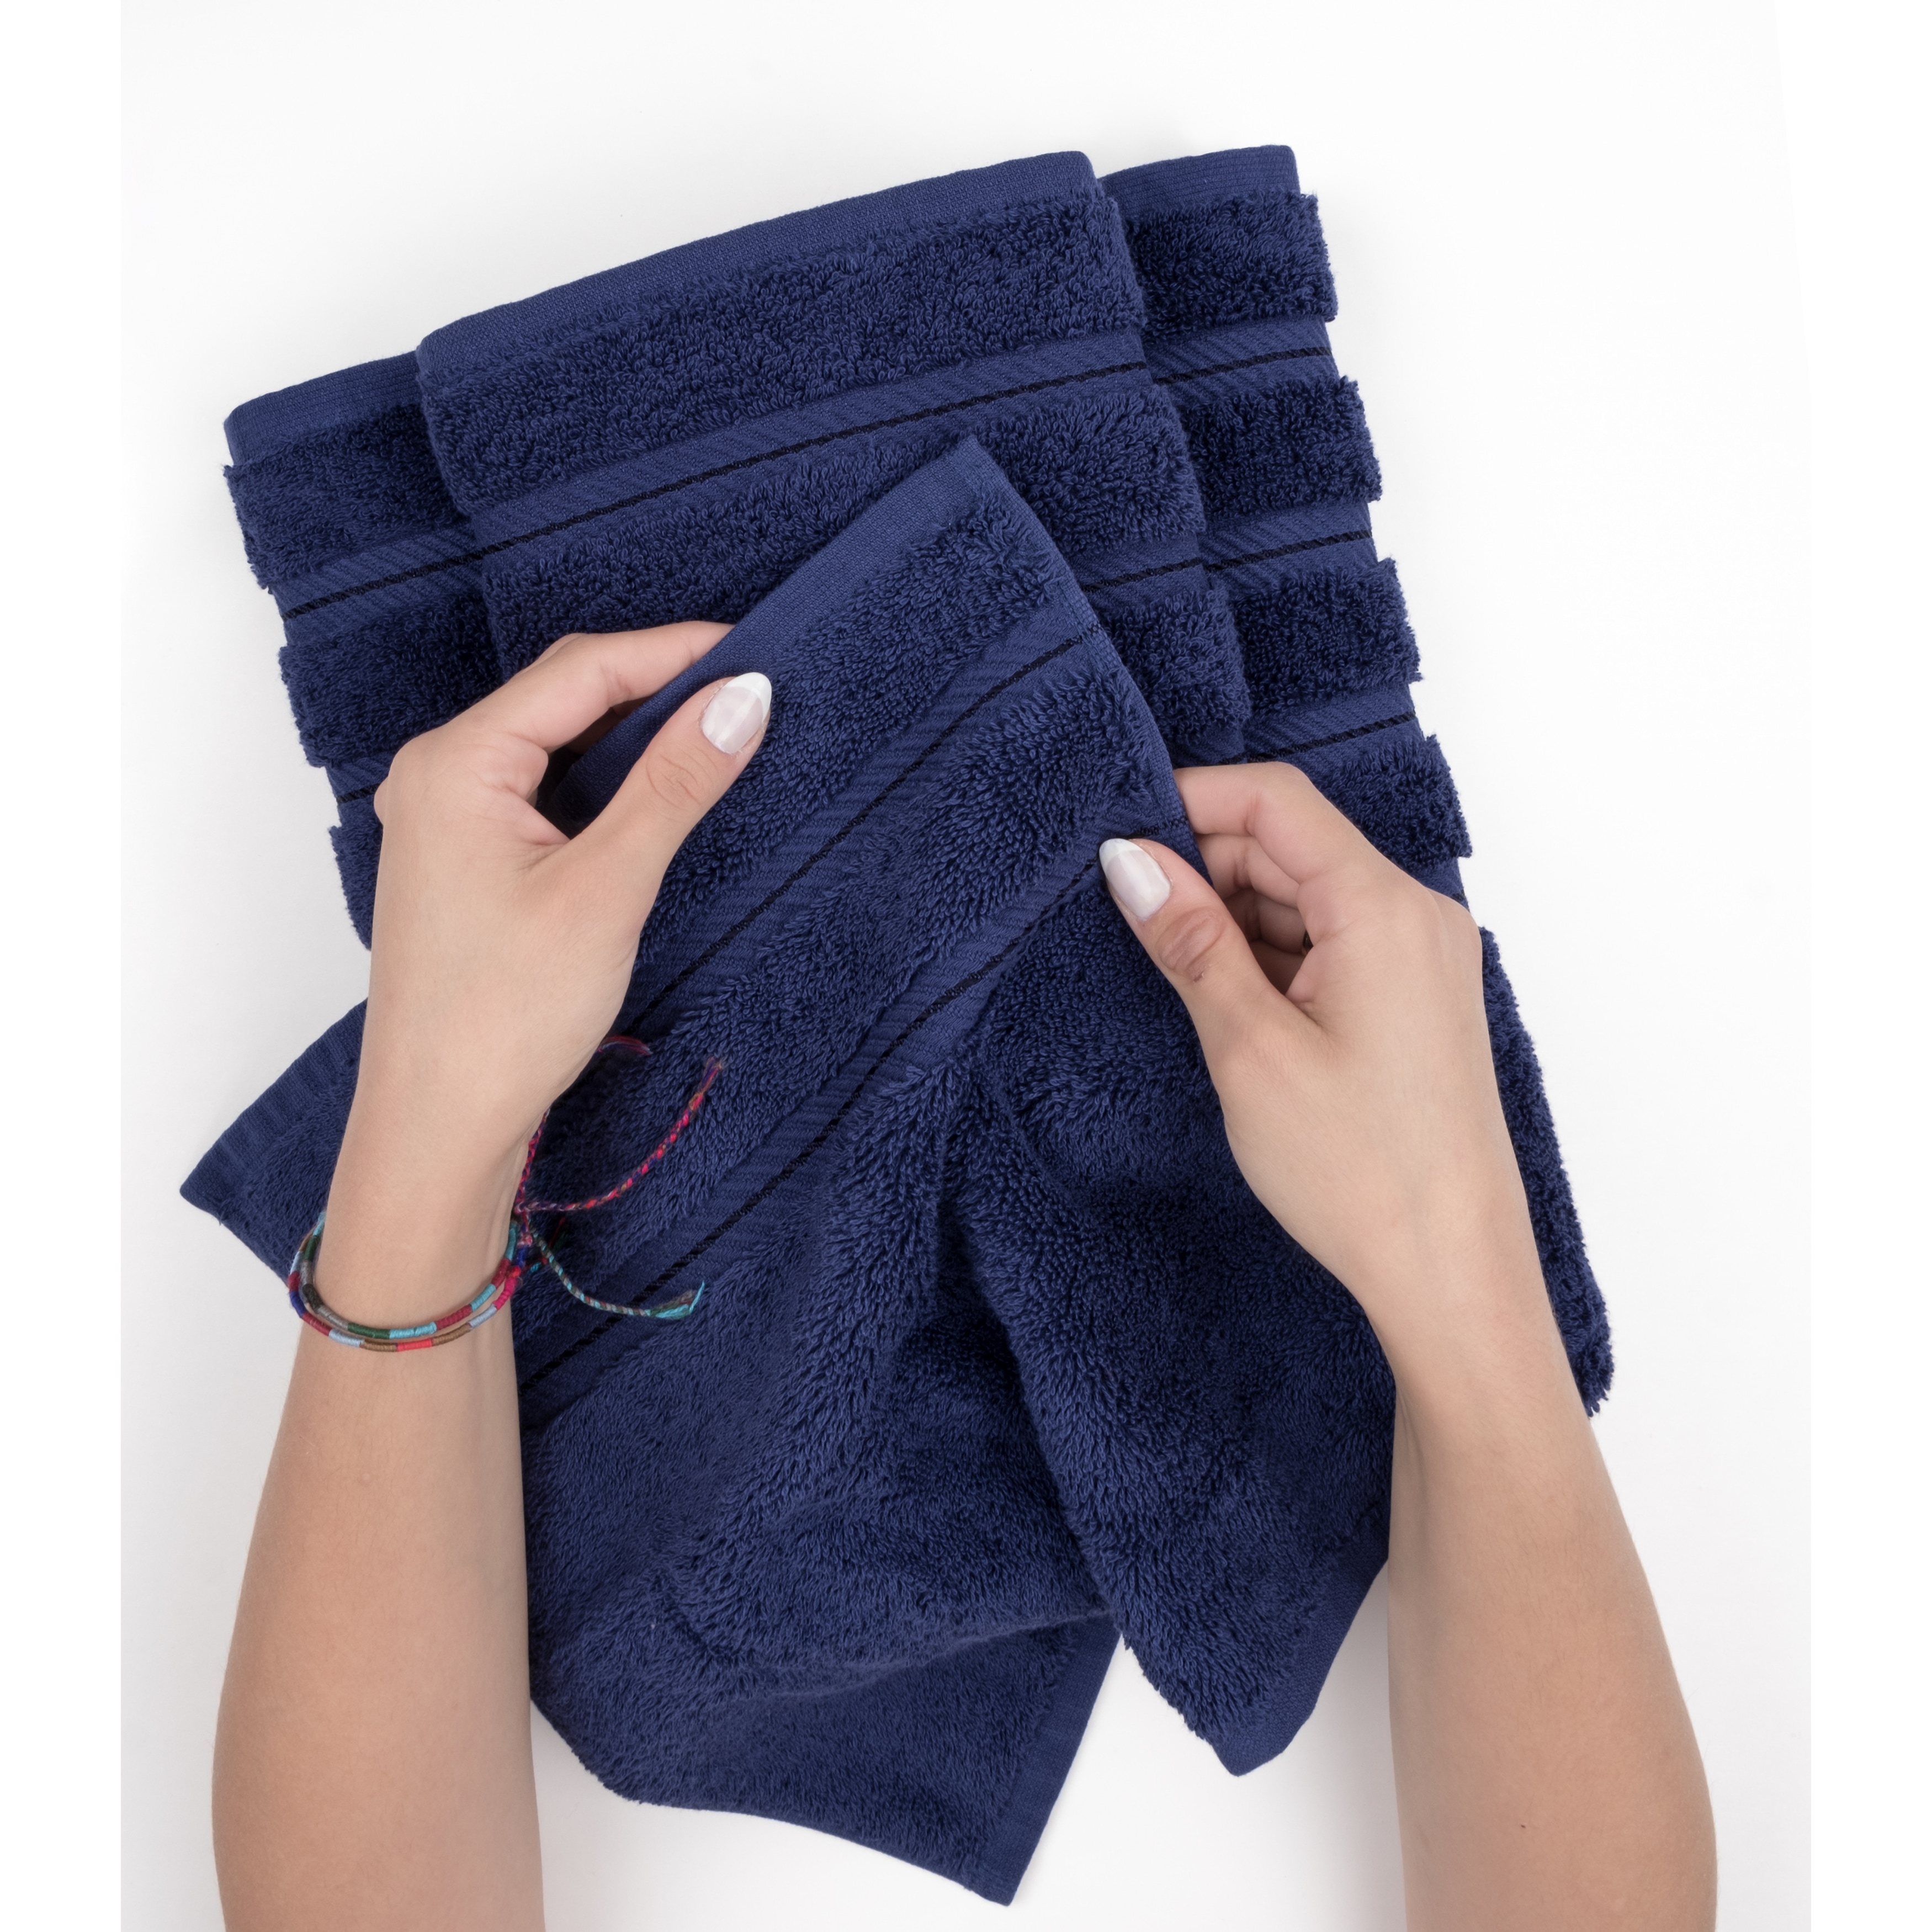 Turkish Hand Towel-tea Towel-navy Blue Hand Towel-throw Hand Towel-20x36bulk  Hand Towel-service Towel-napkin-kitchen Towelgzd,lms,pskr 